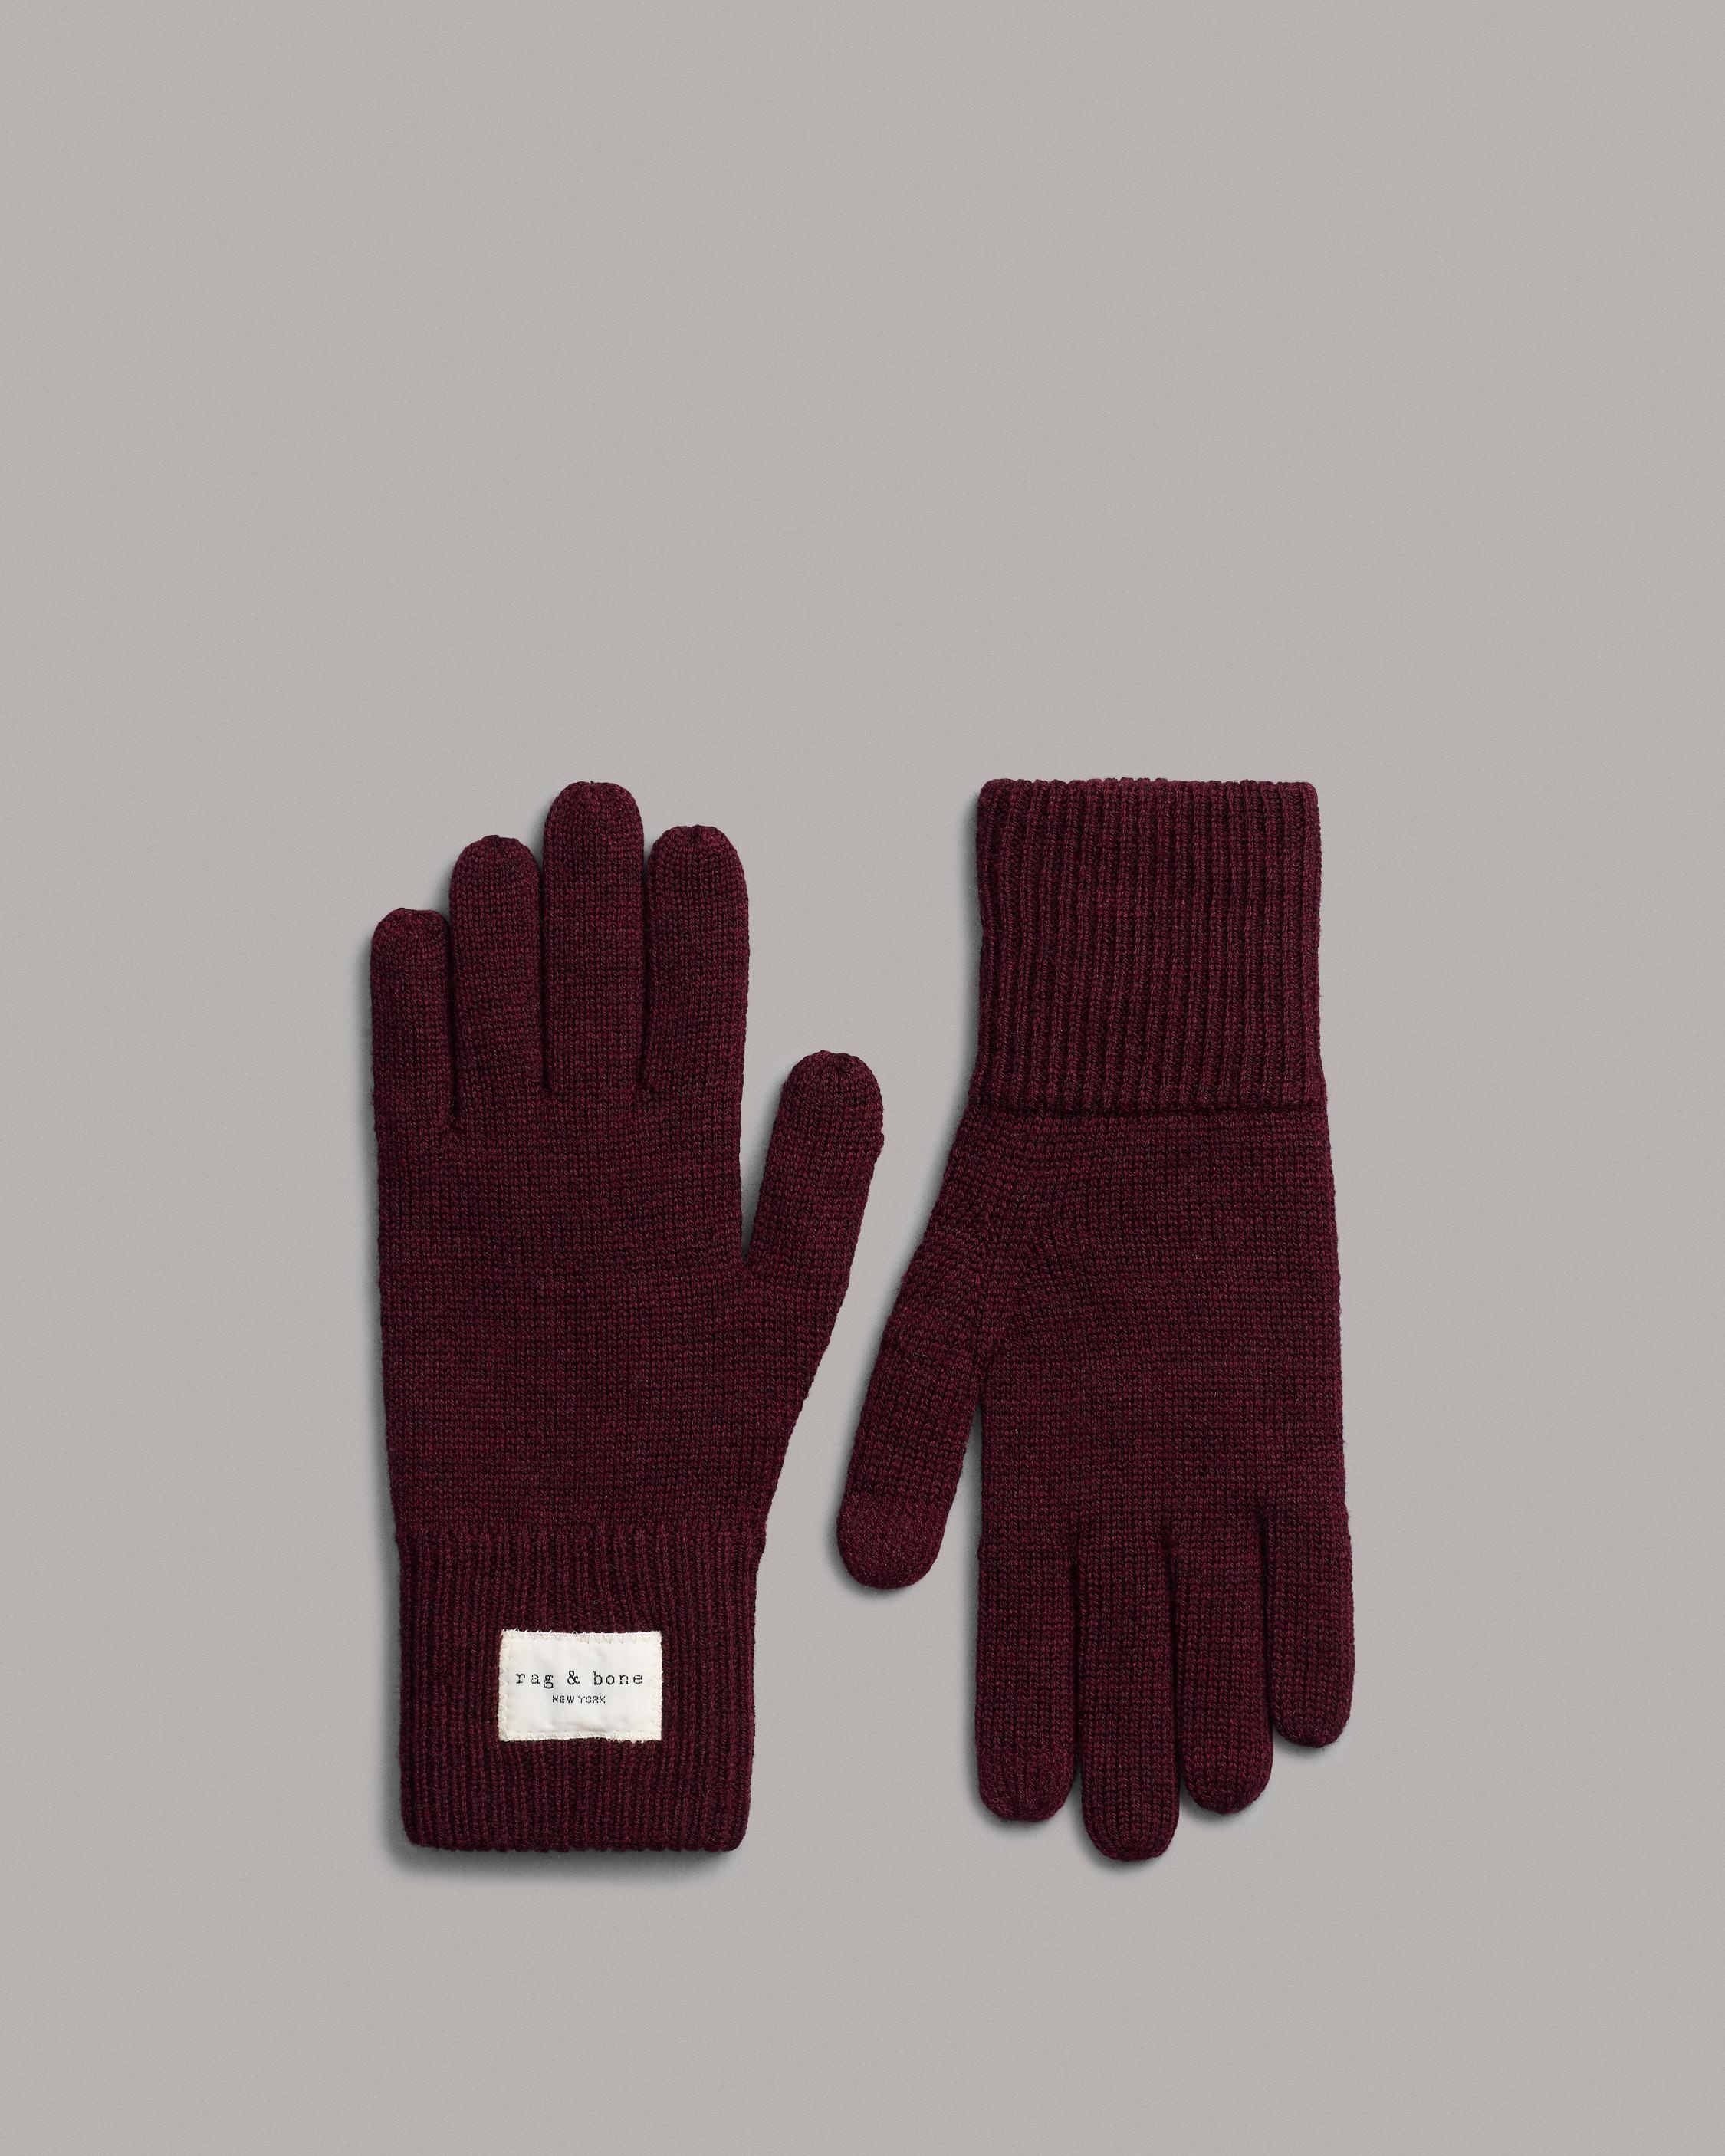 Addison Tech Gloves
Wool Gloves - 1